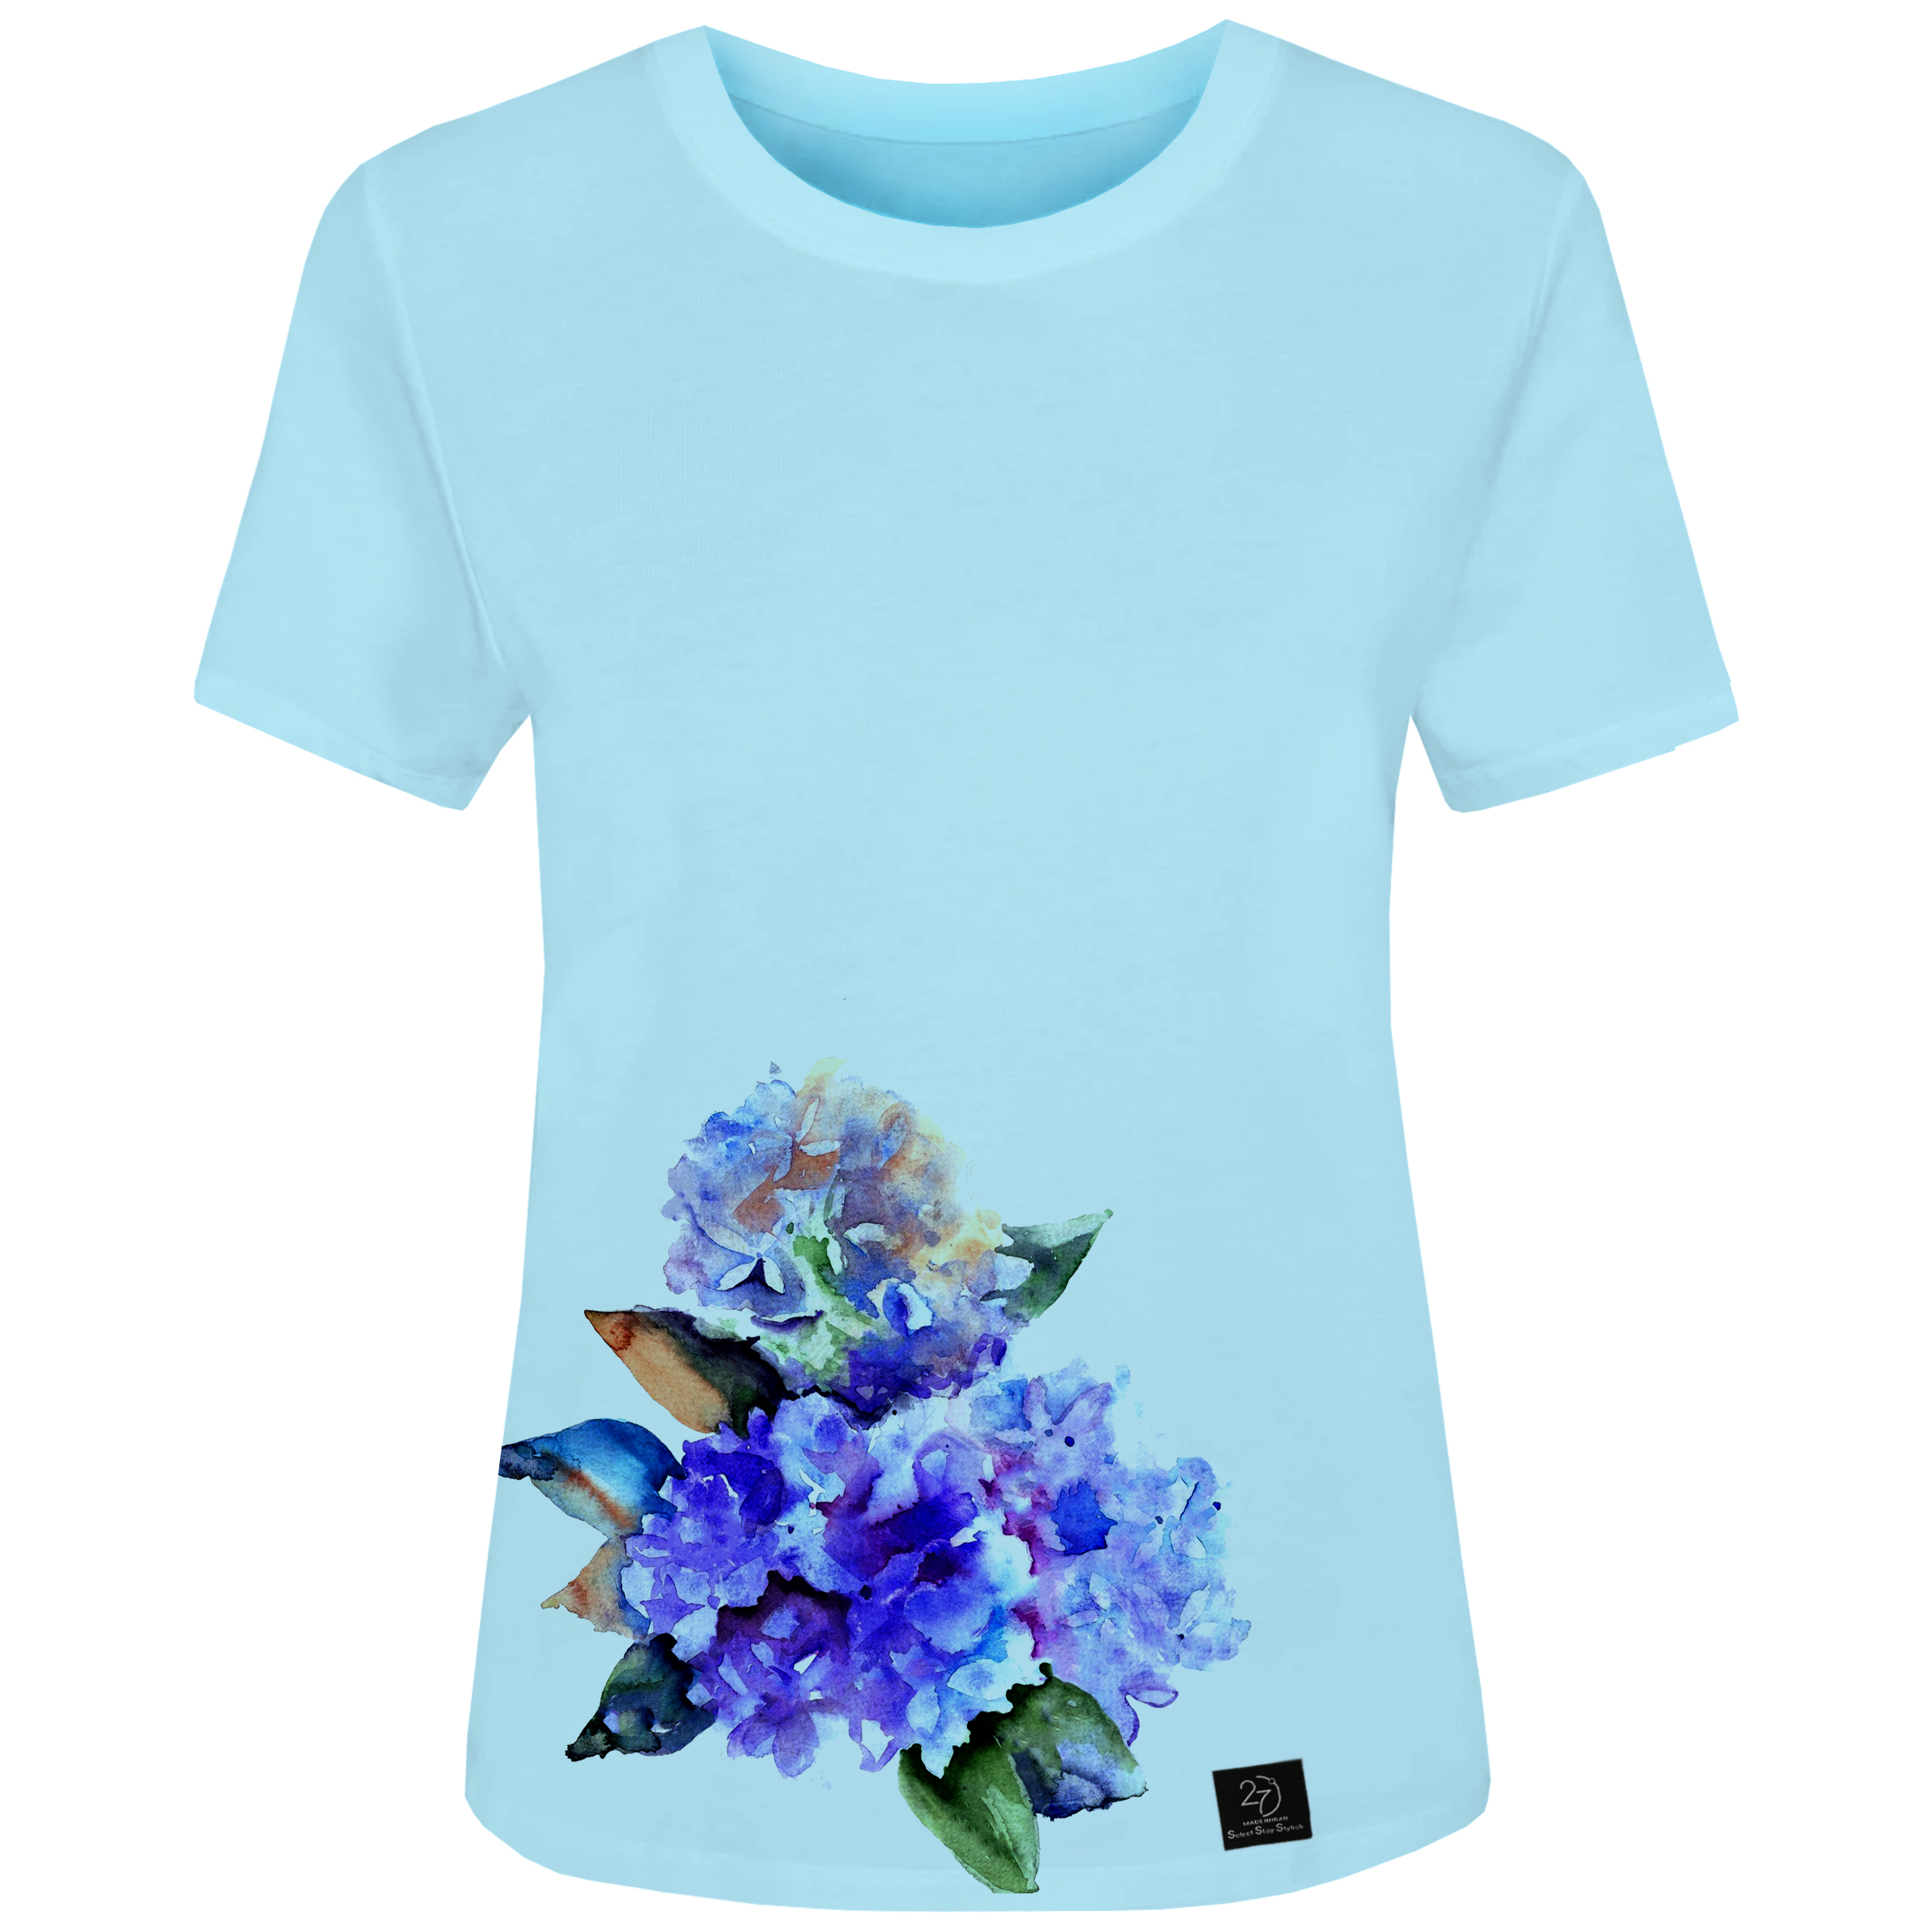 تی شرت زنانه 27 مدل گل کد H21 رنگ آبی